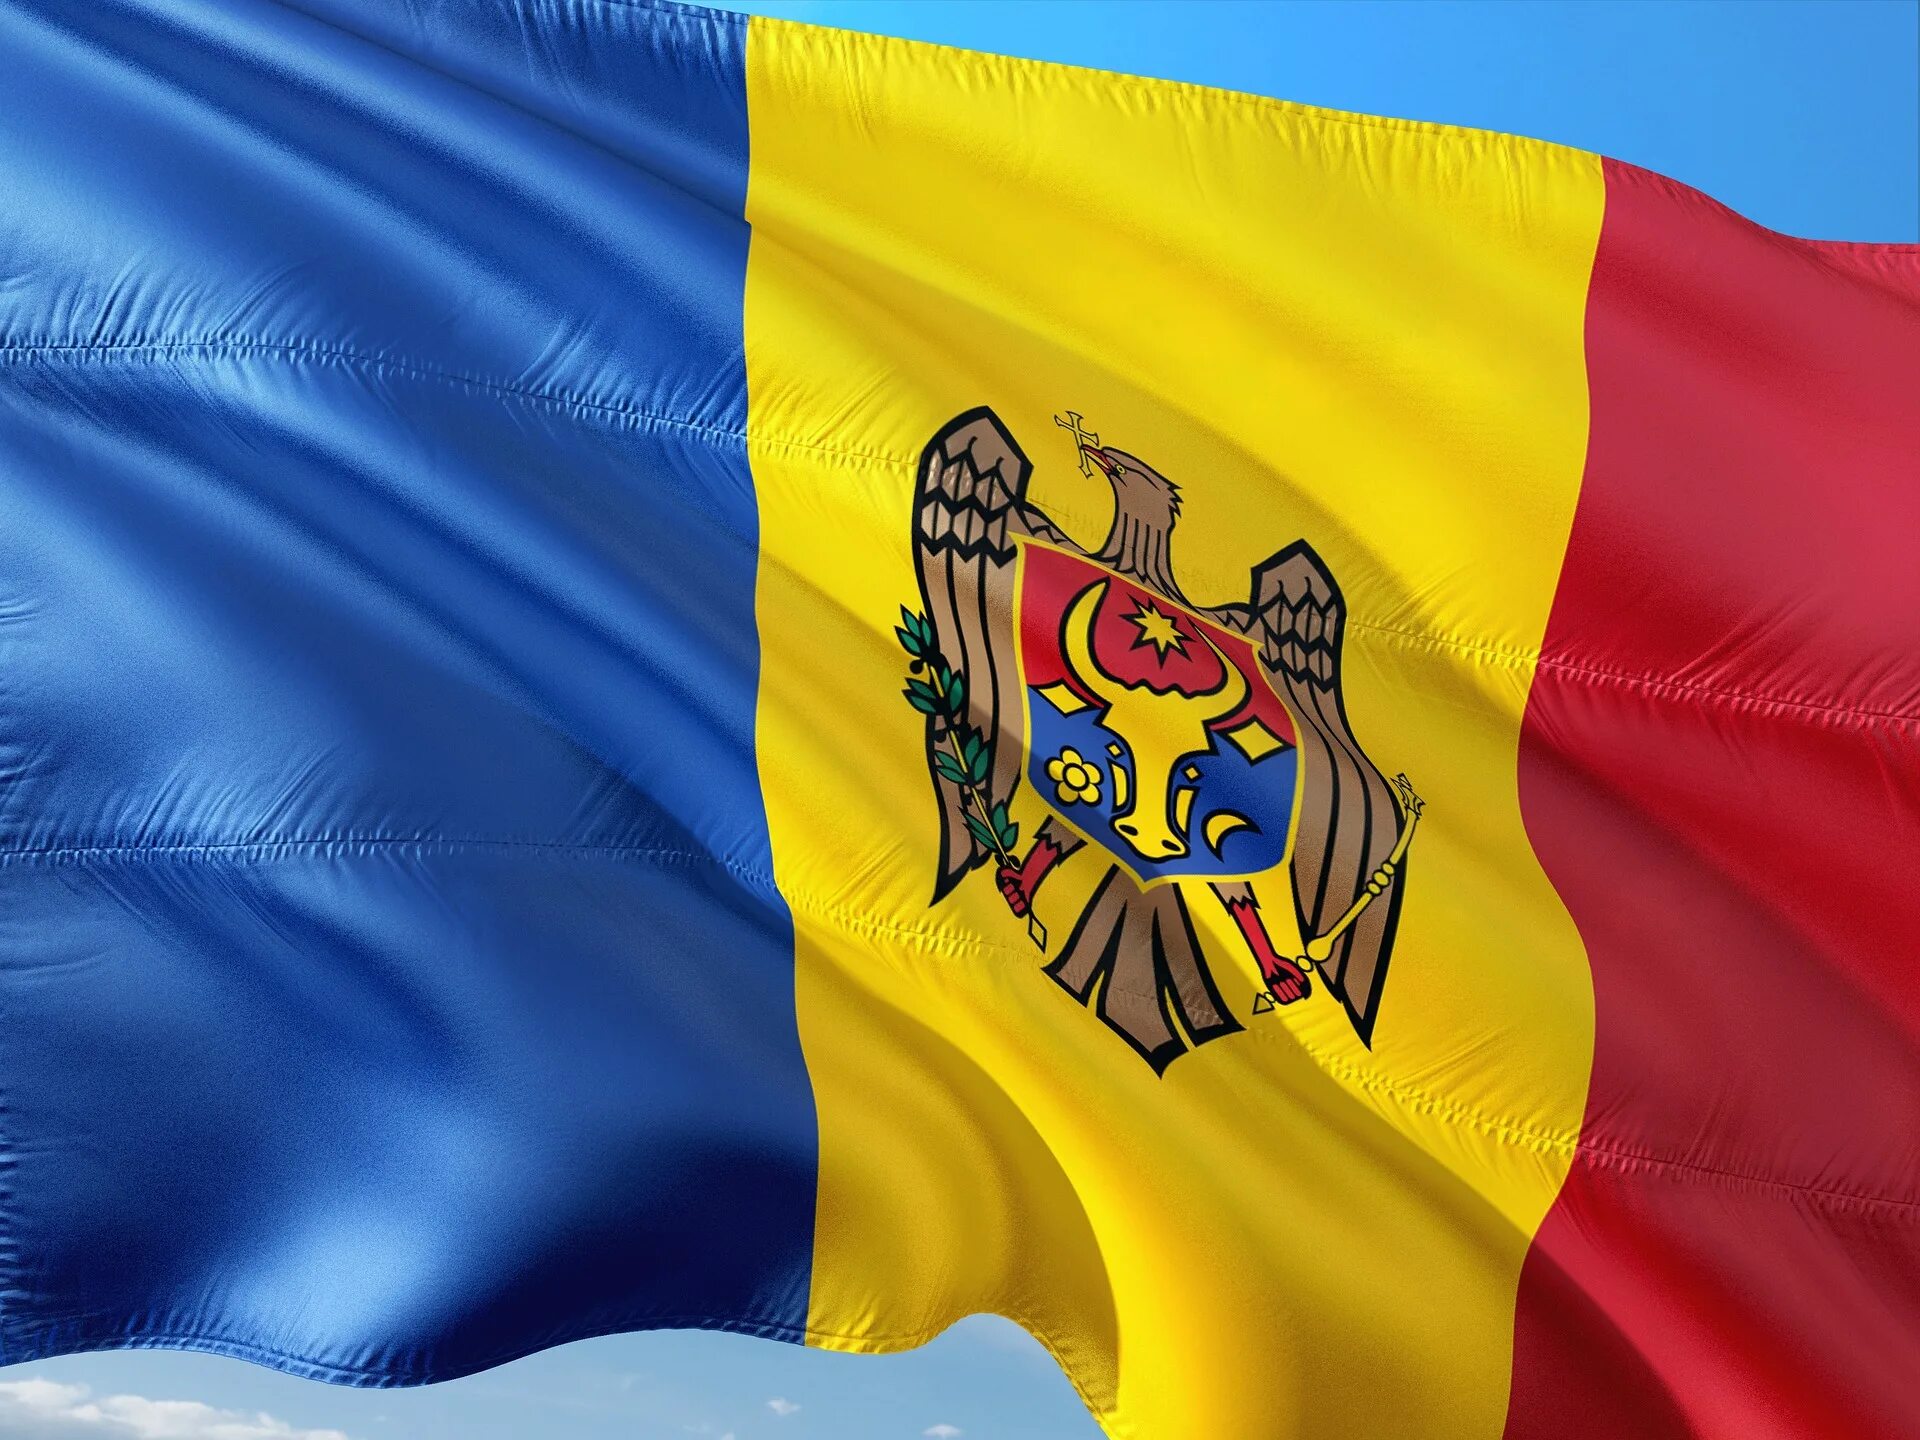 Флаг молдавской республики. Флаг Молдавии. Флаг Молдовы 1991. Флаг Республики Молдова. Молдавия Кишинев флаг.